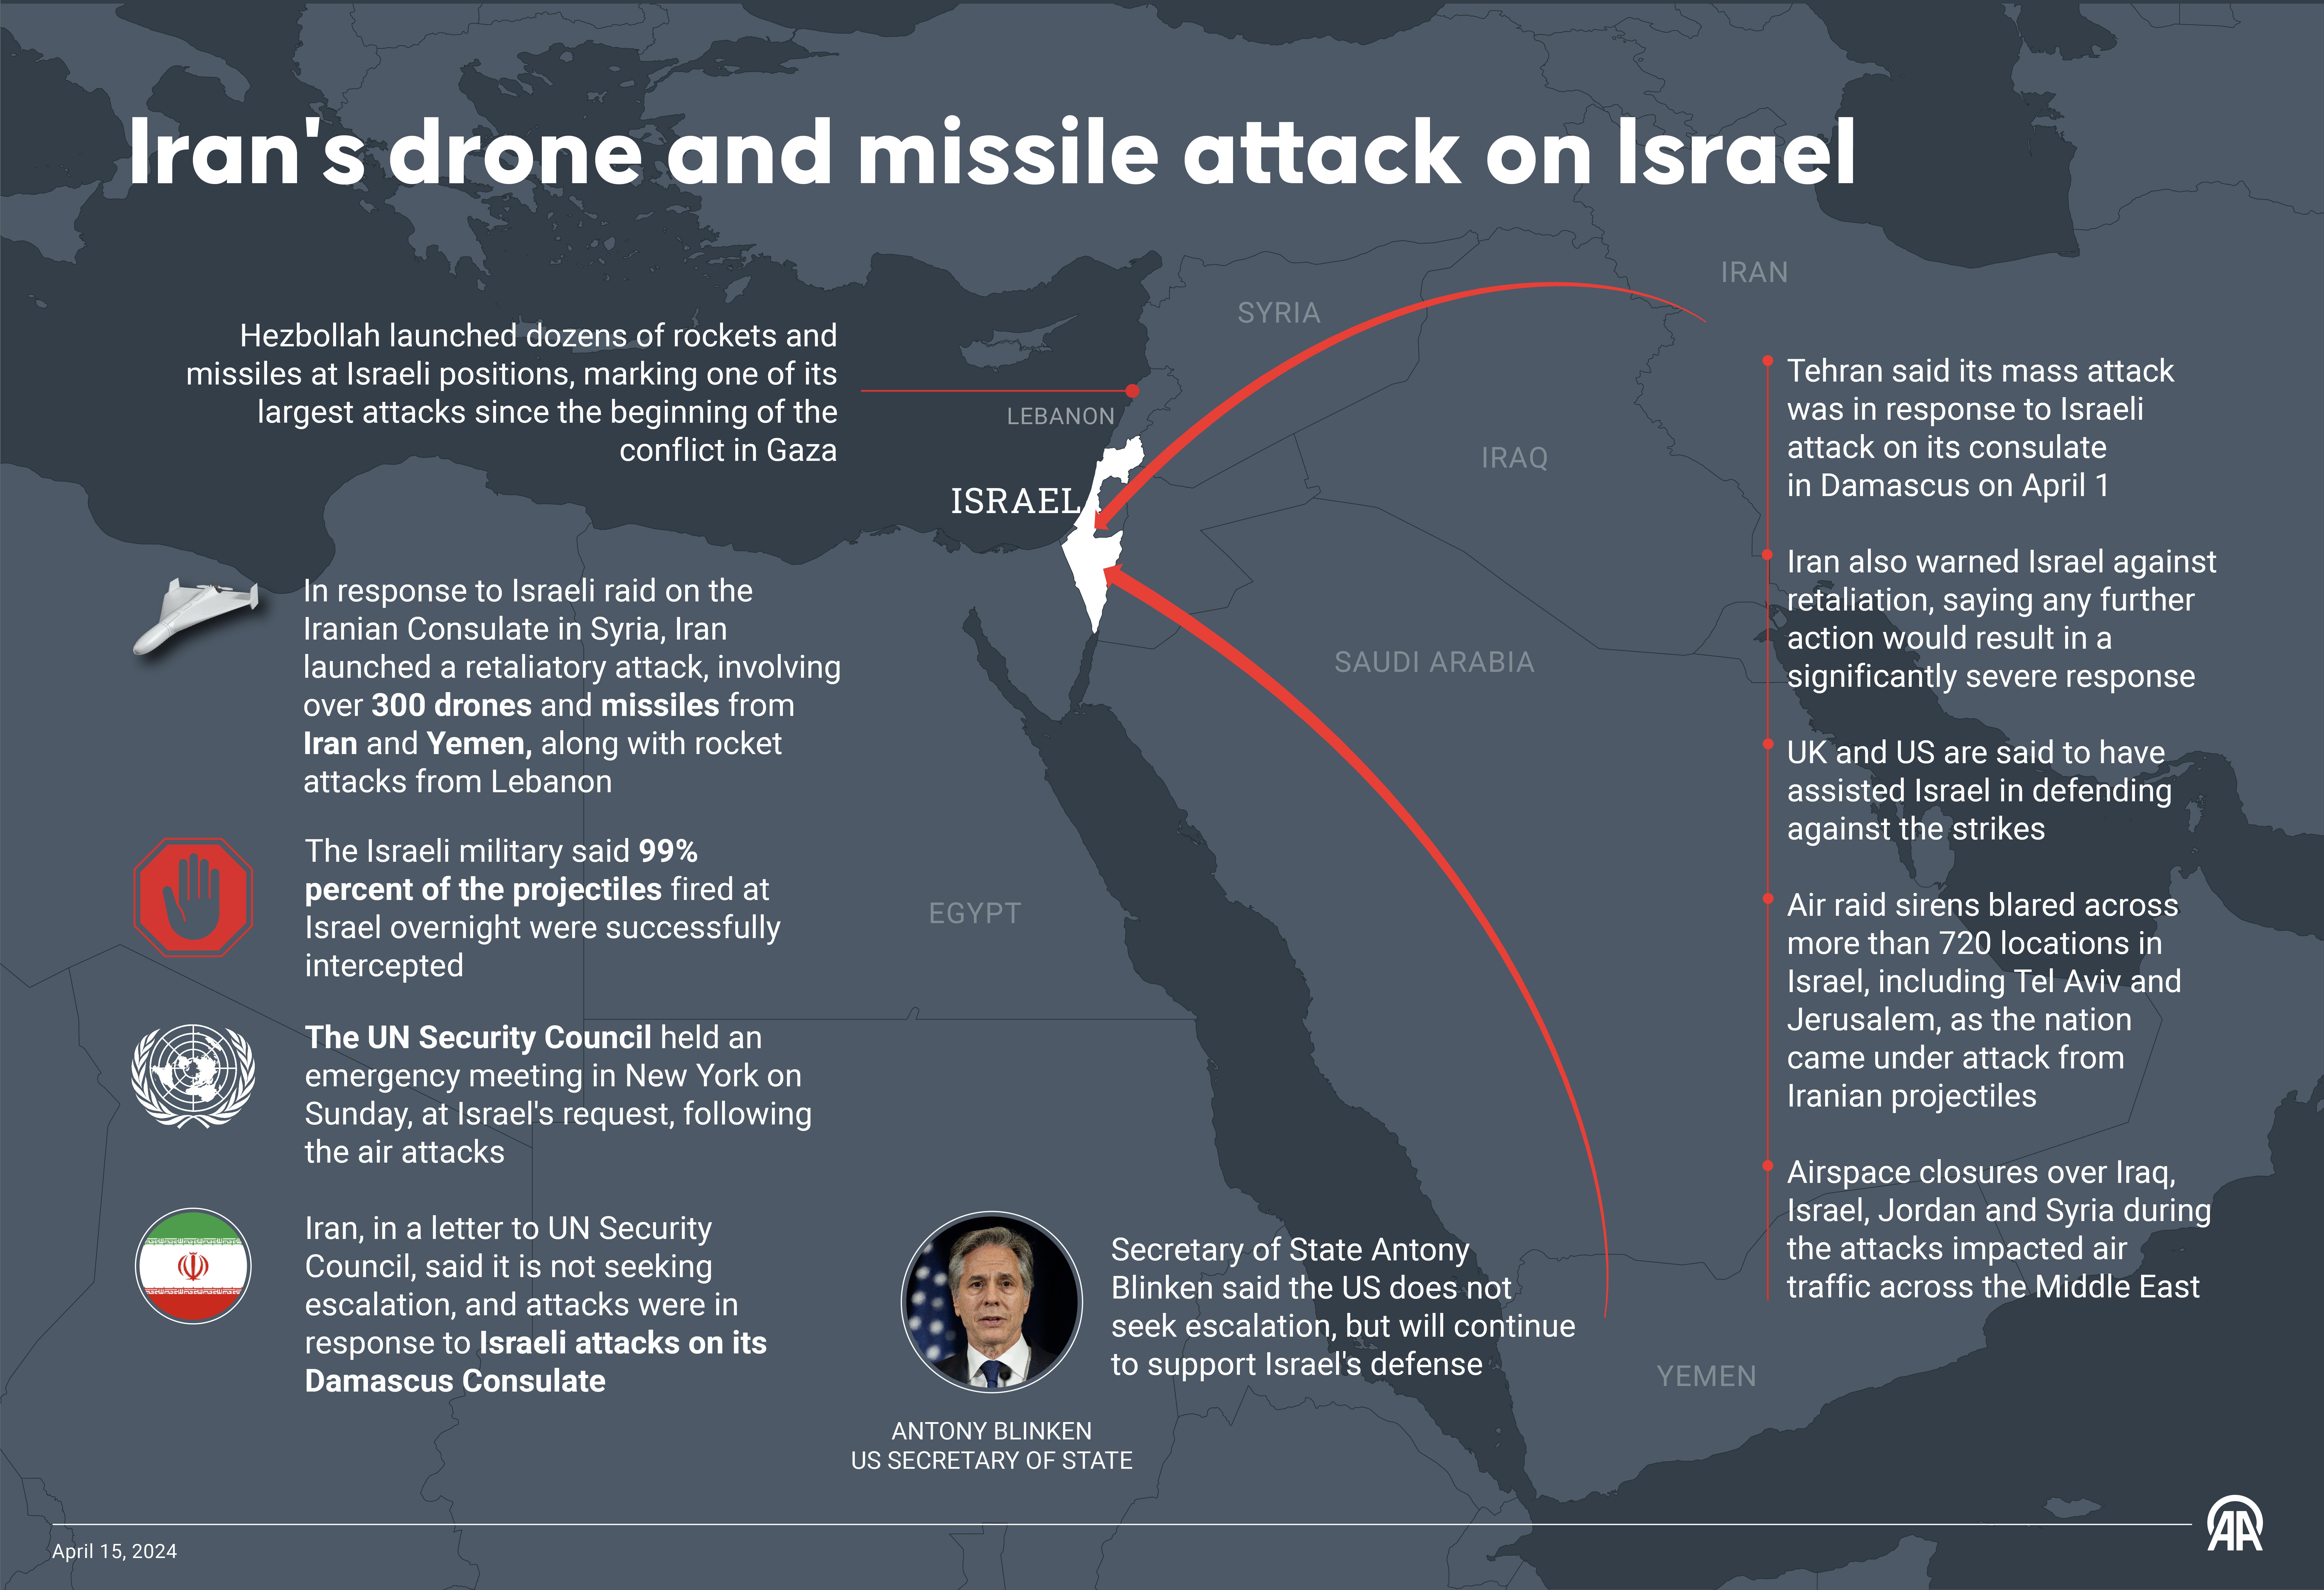 ANKARA, TURKIYE - APRIL 15: An infographic titled 'Iran's drone and missile attack on Israel created in Ankara, Turkiye on April 15, 2024. (Photo by Kenan Kaplan/Anadolu via Getty Images)